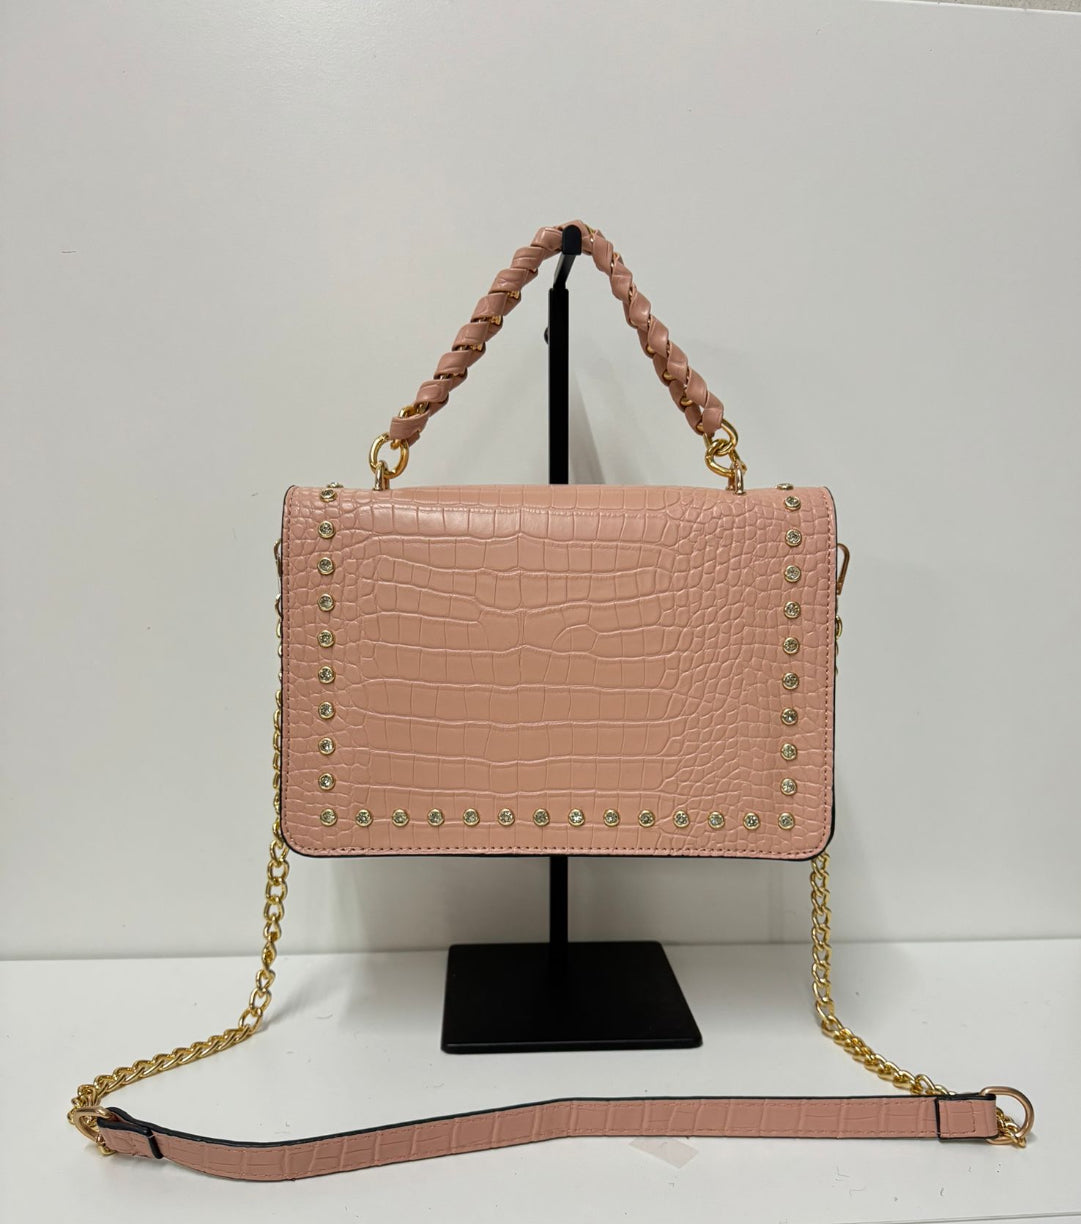 Mayfair Mock Croc Bag with Crystals - Pink